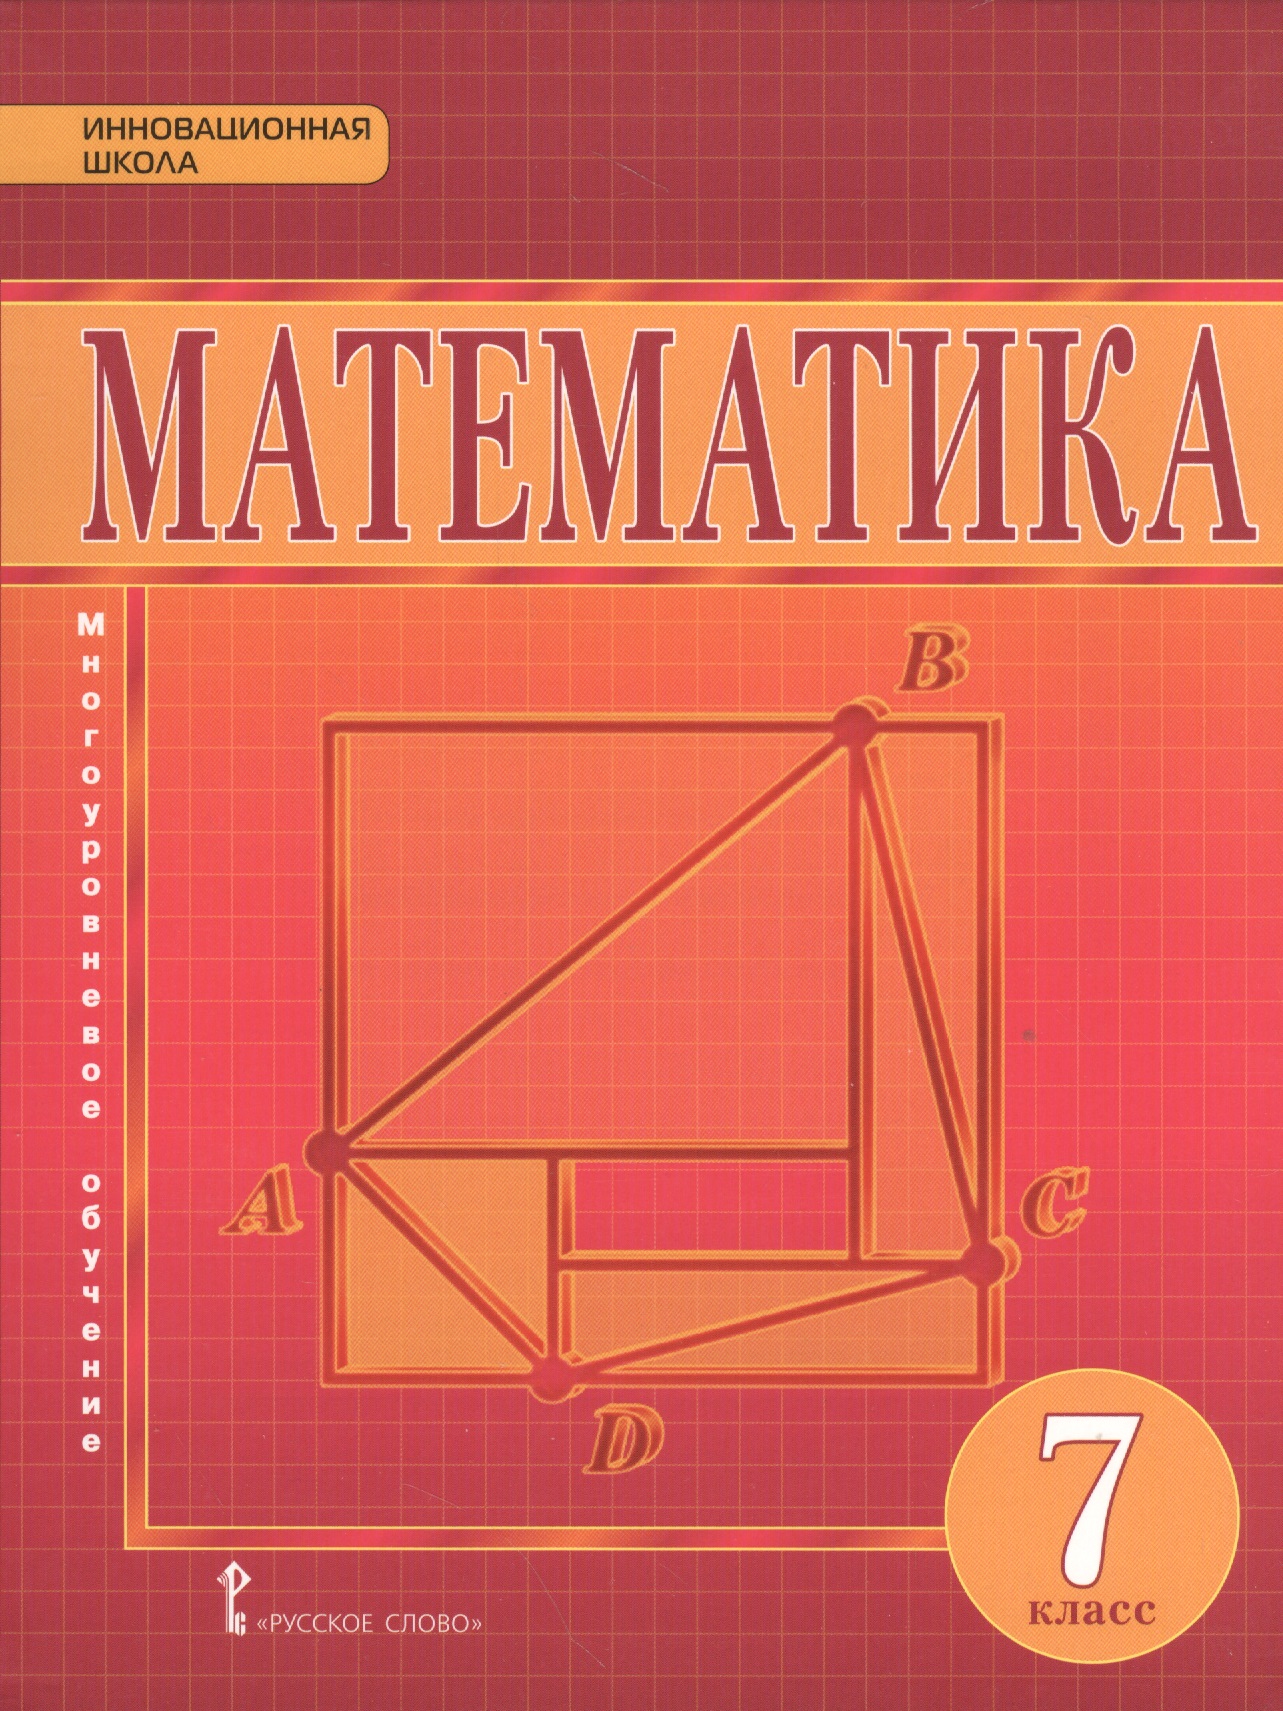 Книги 7 кл. Учебник математики 7 класс. Математика 7 класс учебник. Учебник математике 7 класс. Математика геометрия 7 кл..